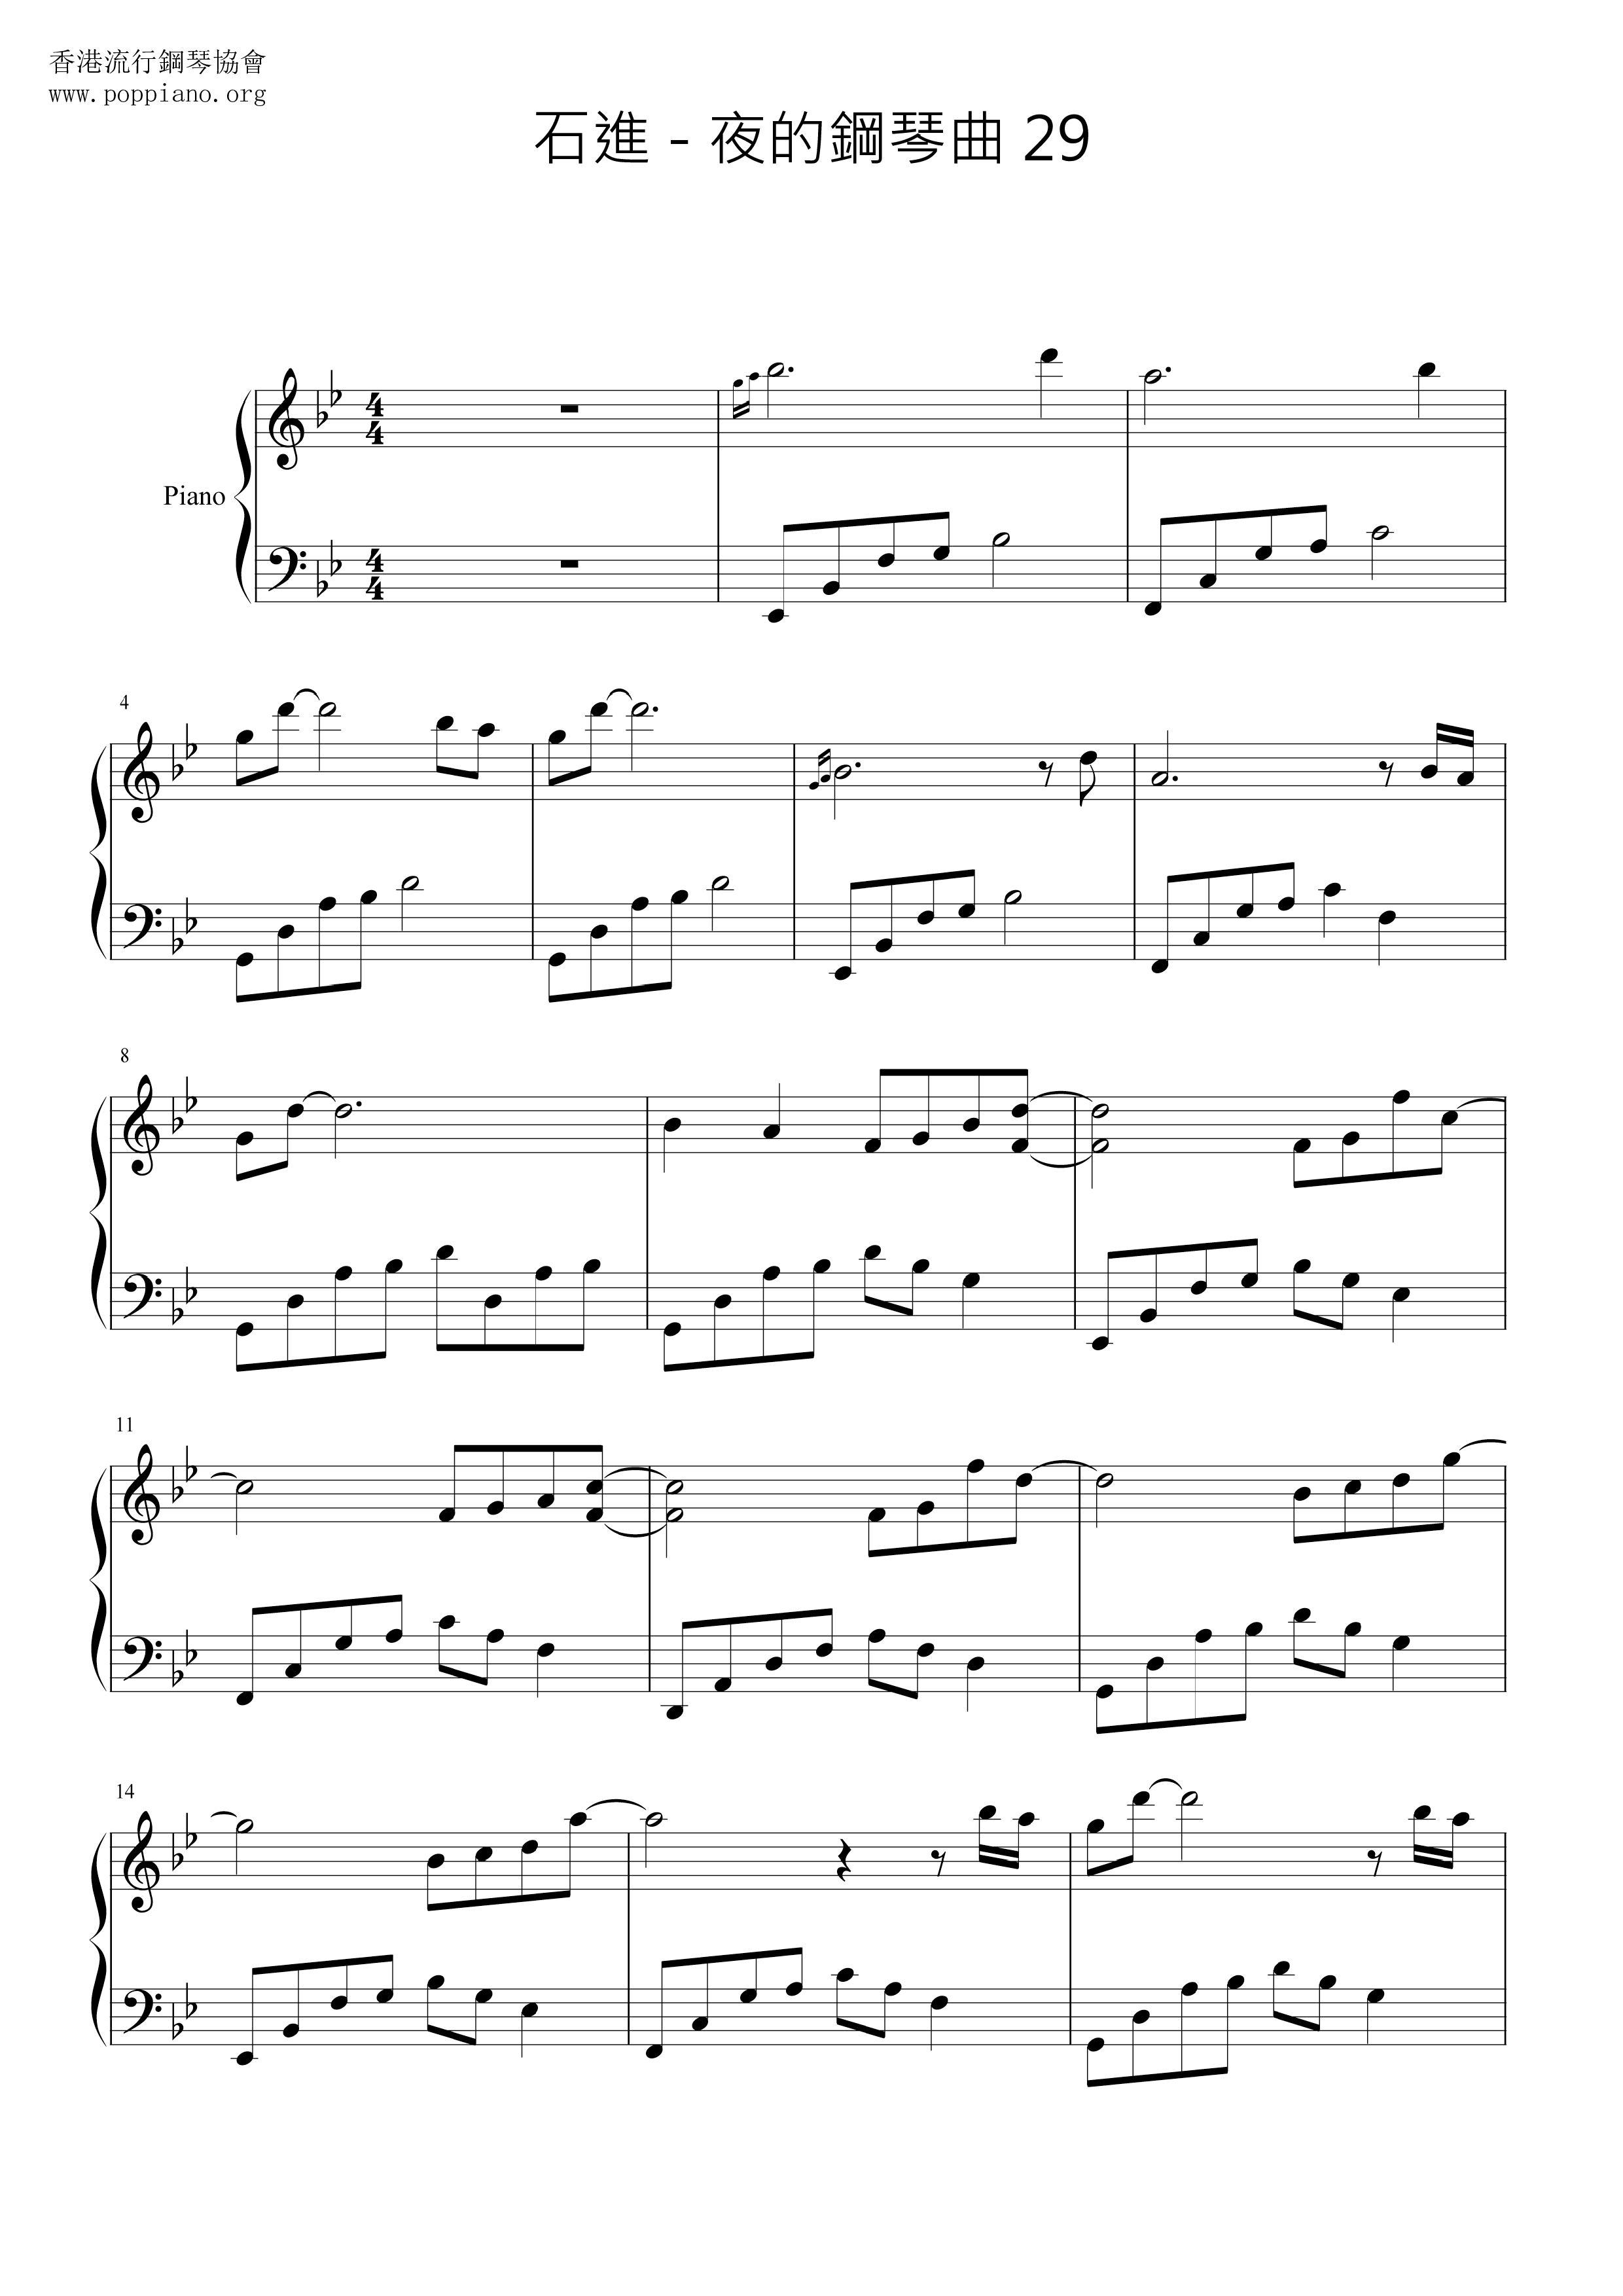 Melody Of The Night 29 Score